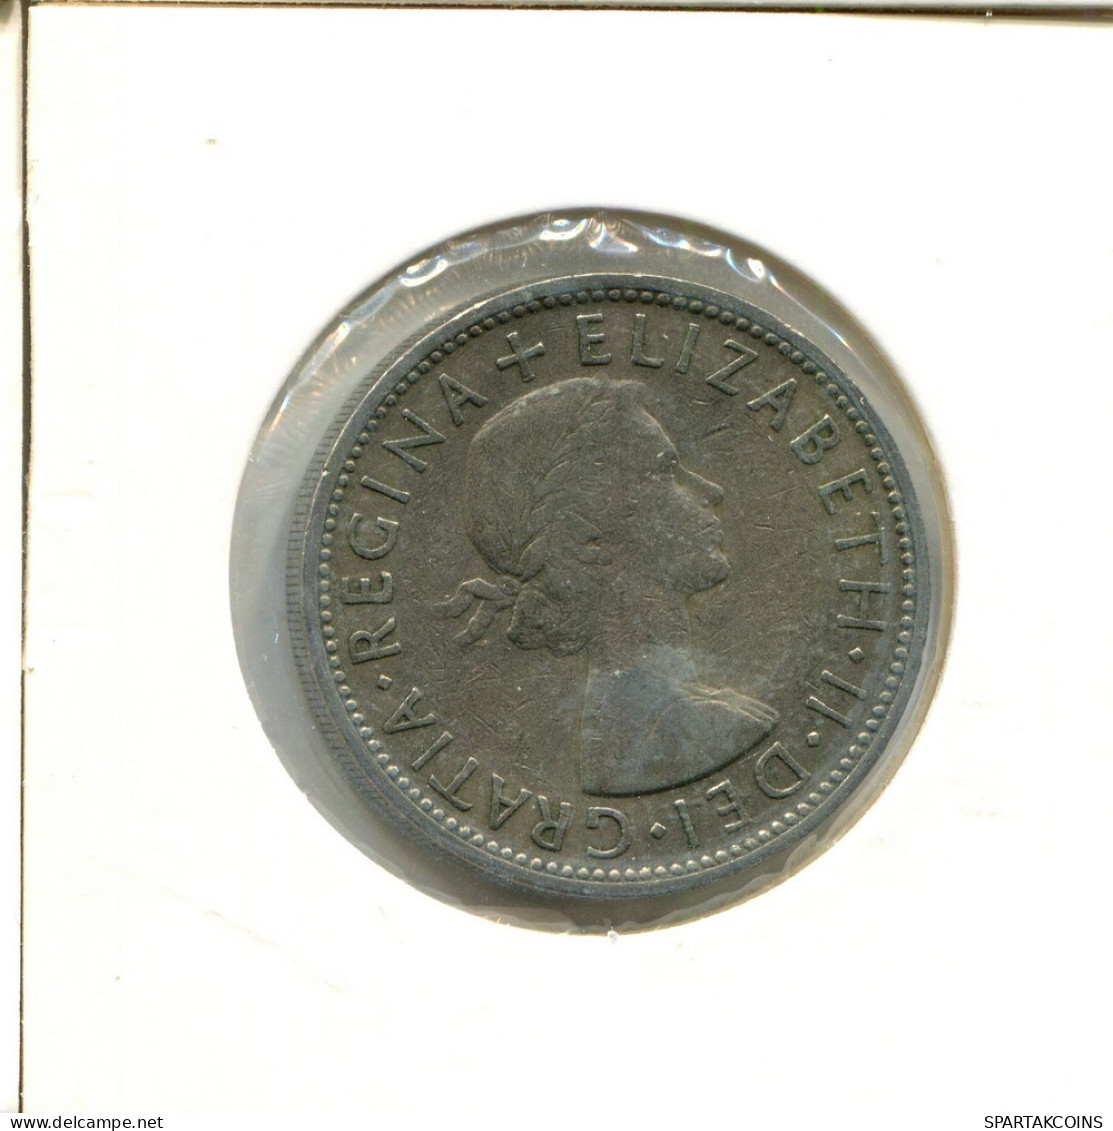 2 SHILLINGS 1963 UK GREAT BRITAIN Coin #BB132.U.A - J. 1 Florin / 2 Shillings